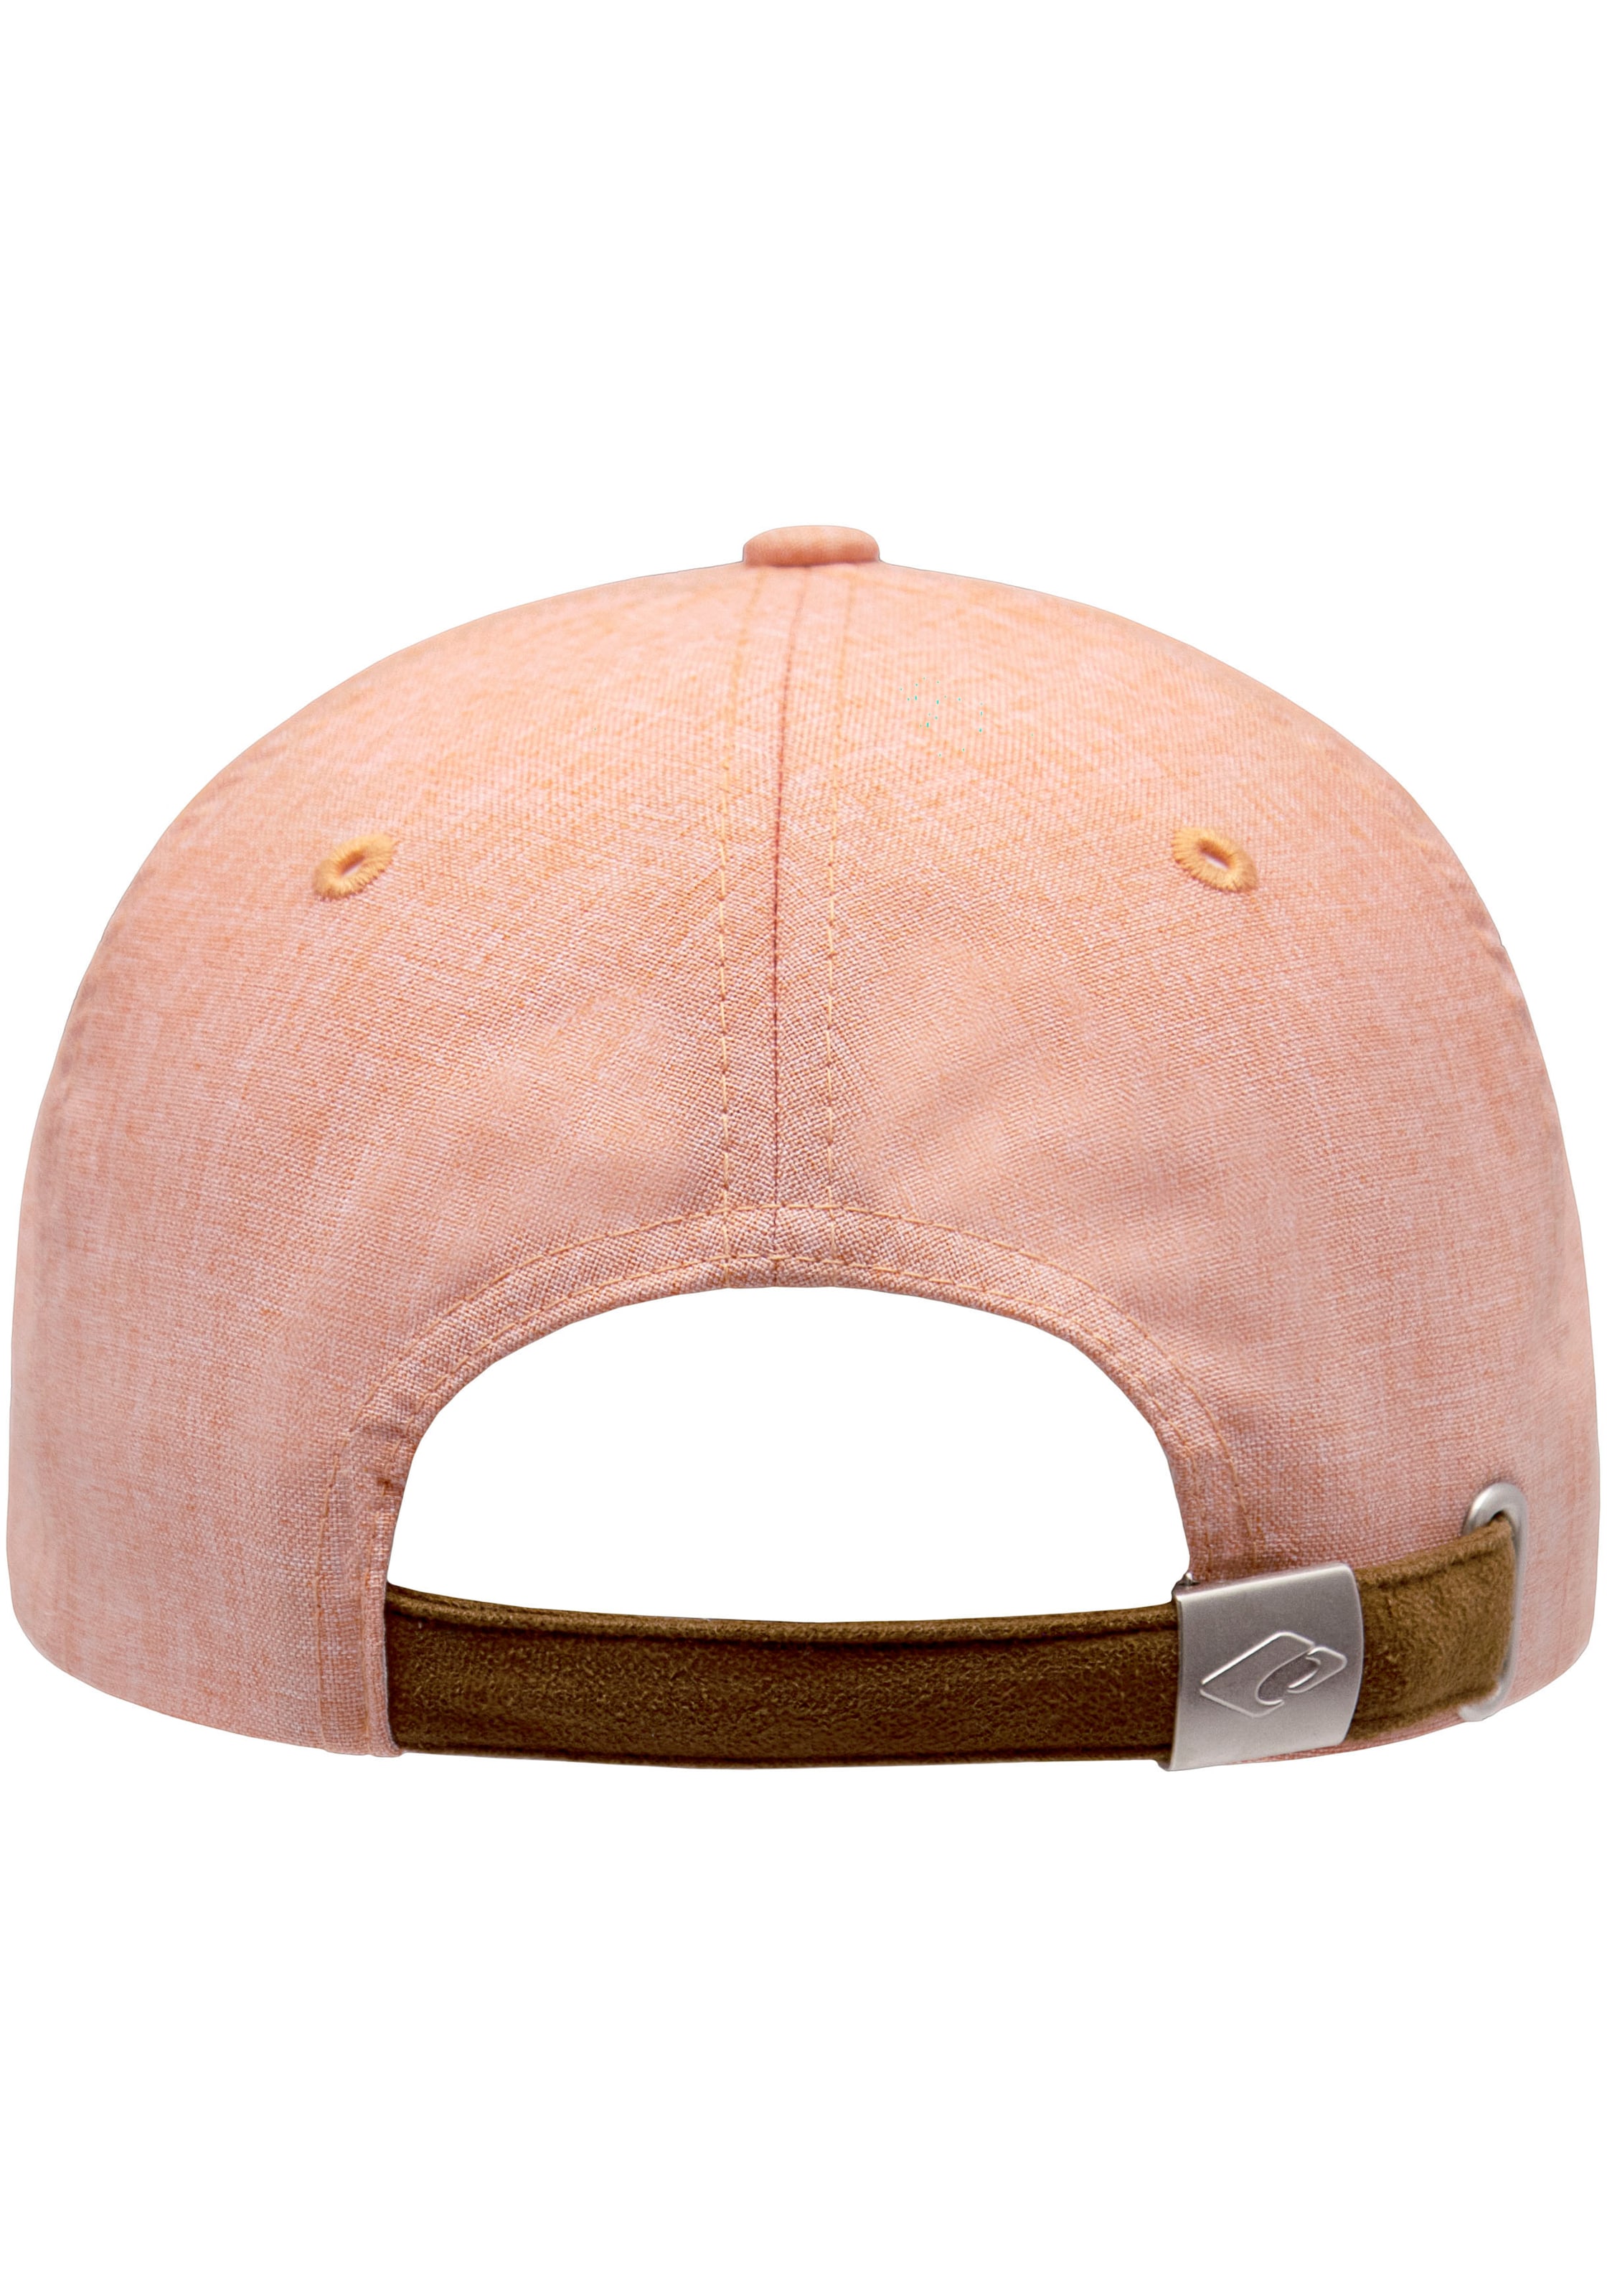 chillouts Baseball Cap, Amadora Hat in melierter Optik bei